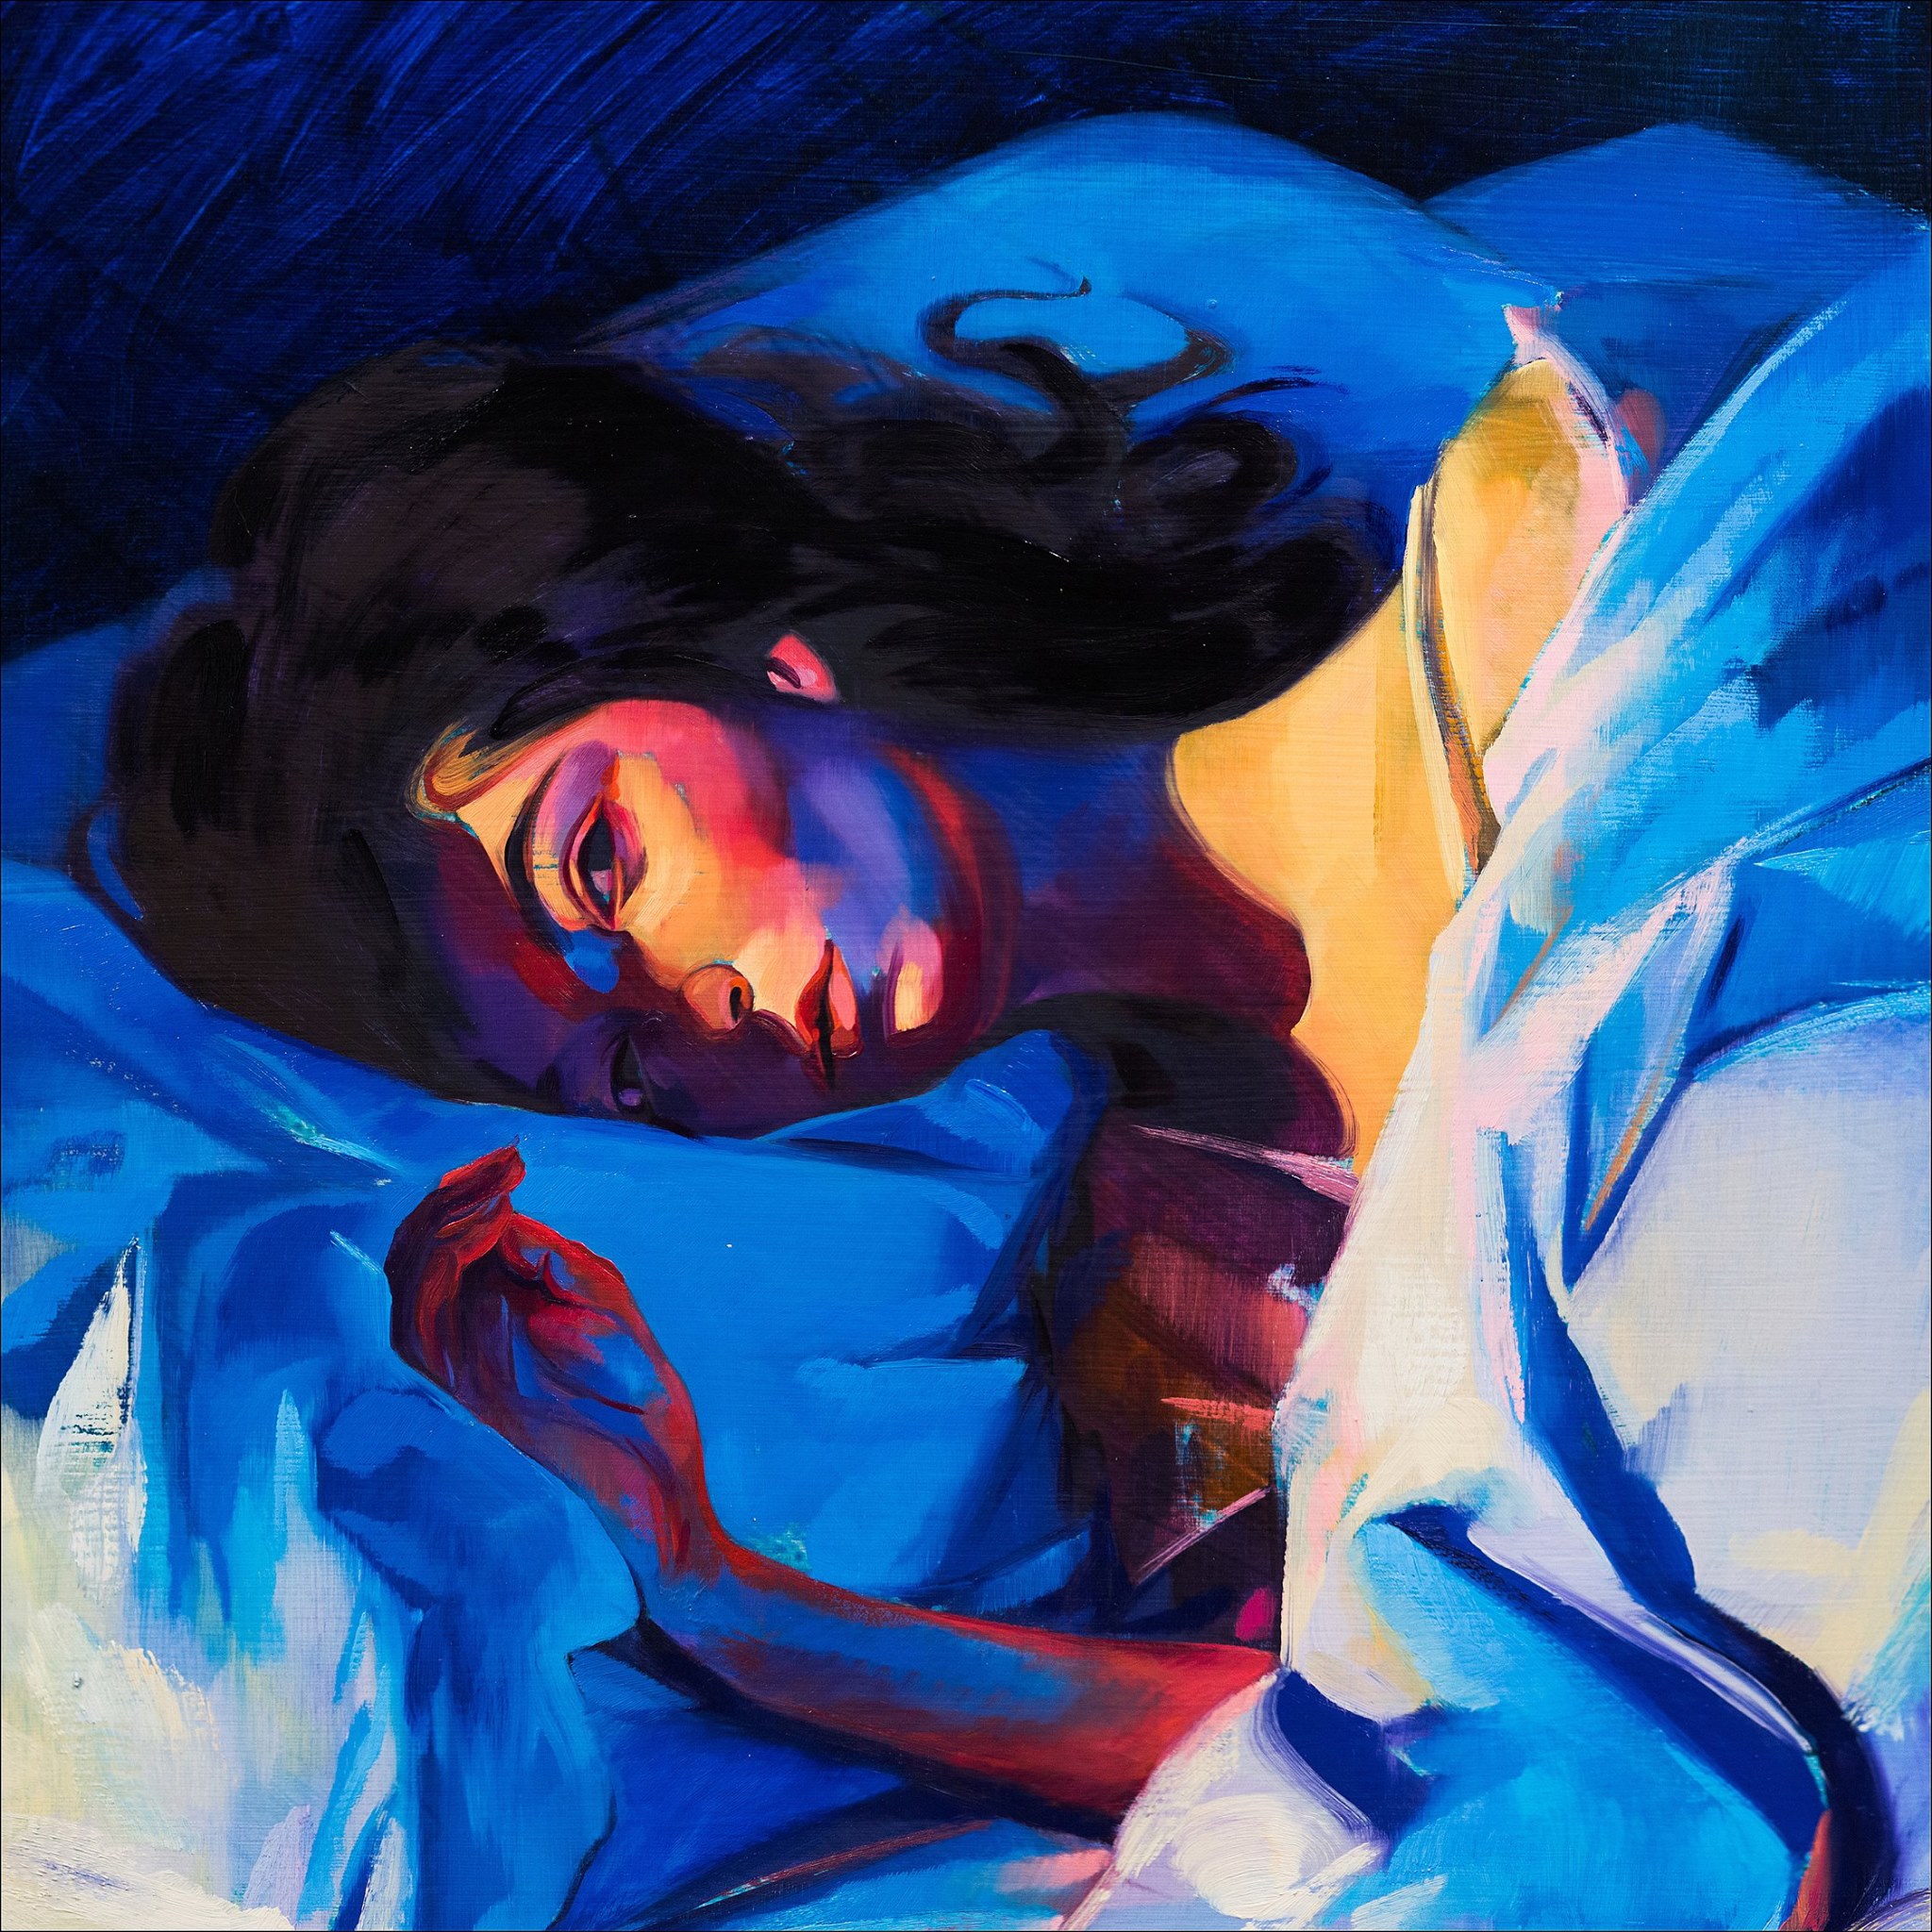 New: Lorde – Green Light